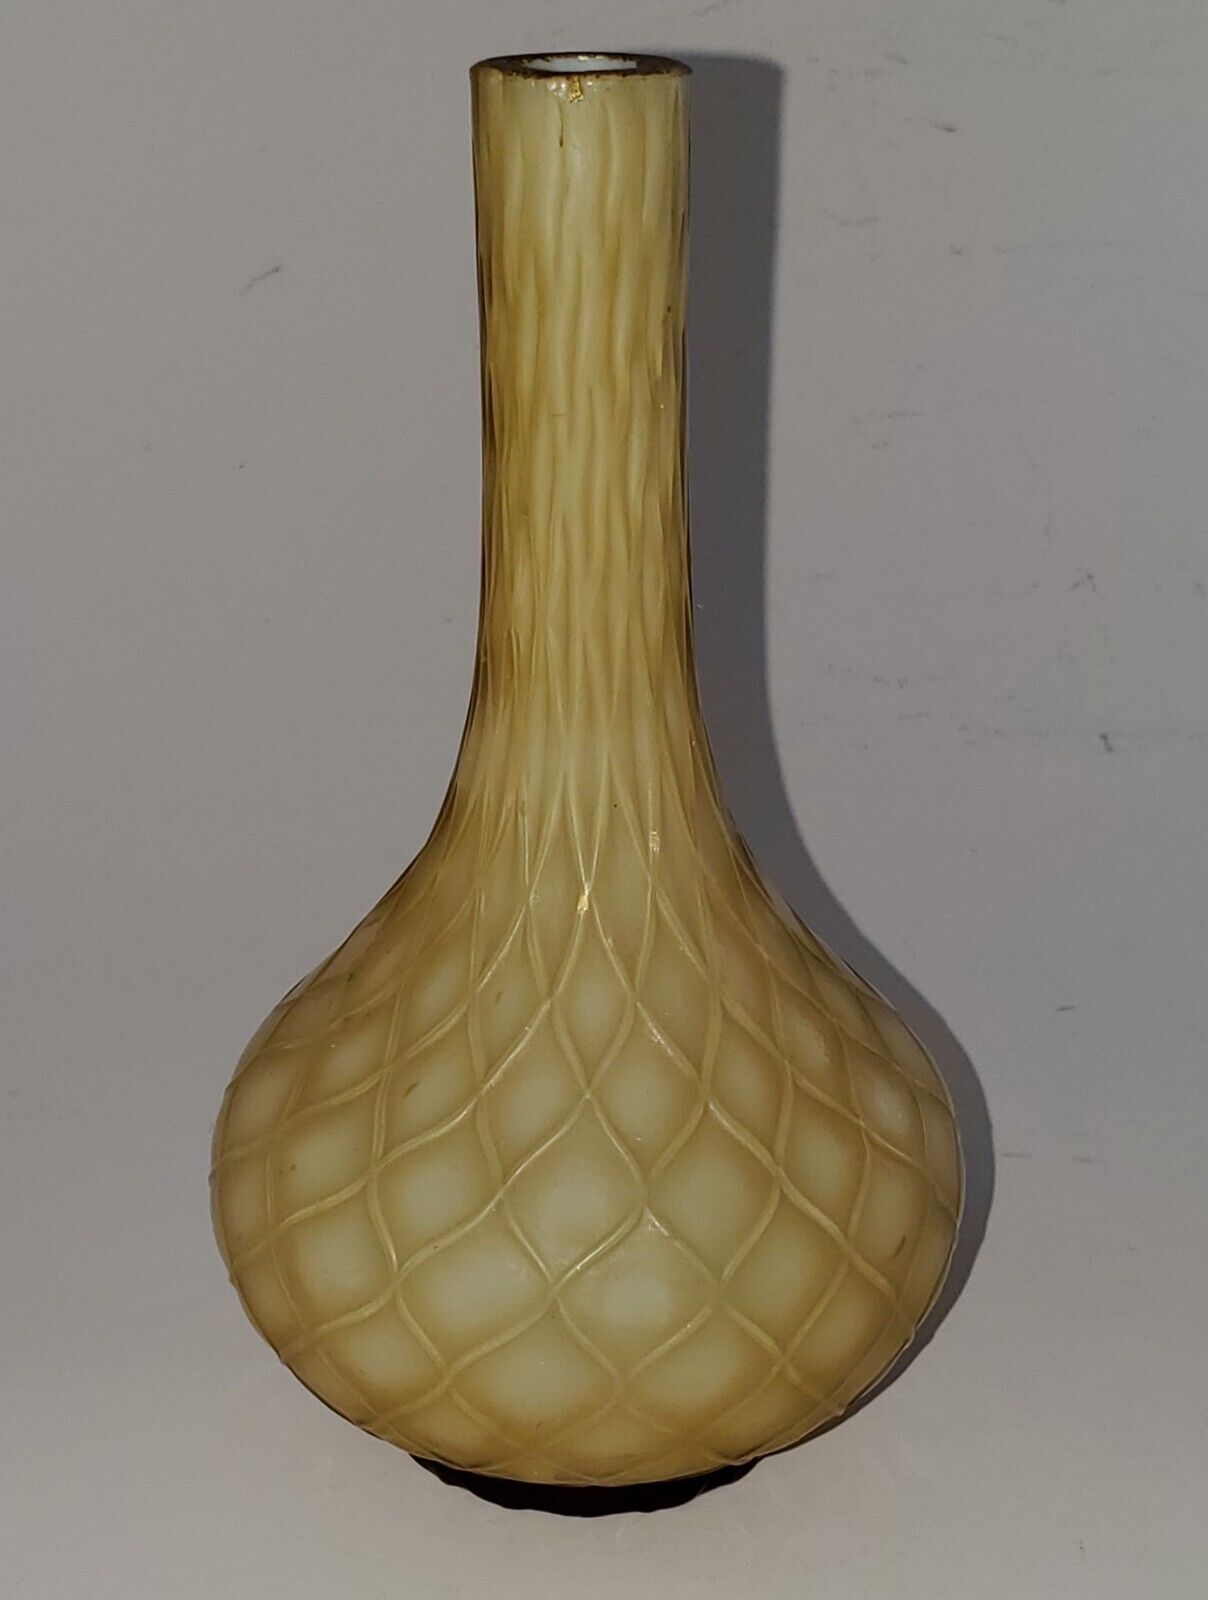 PHOENIX Consolidated Art Glass BUD VASE, Mustard CUT VELVET, 1920s-30s era